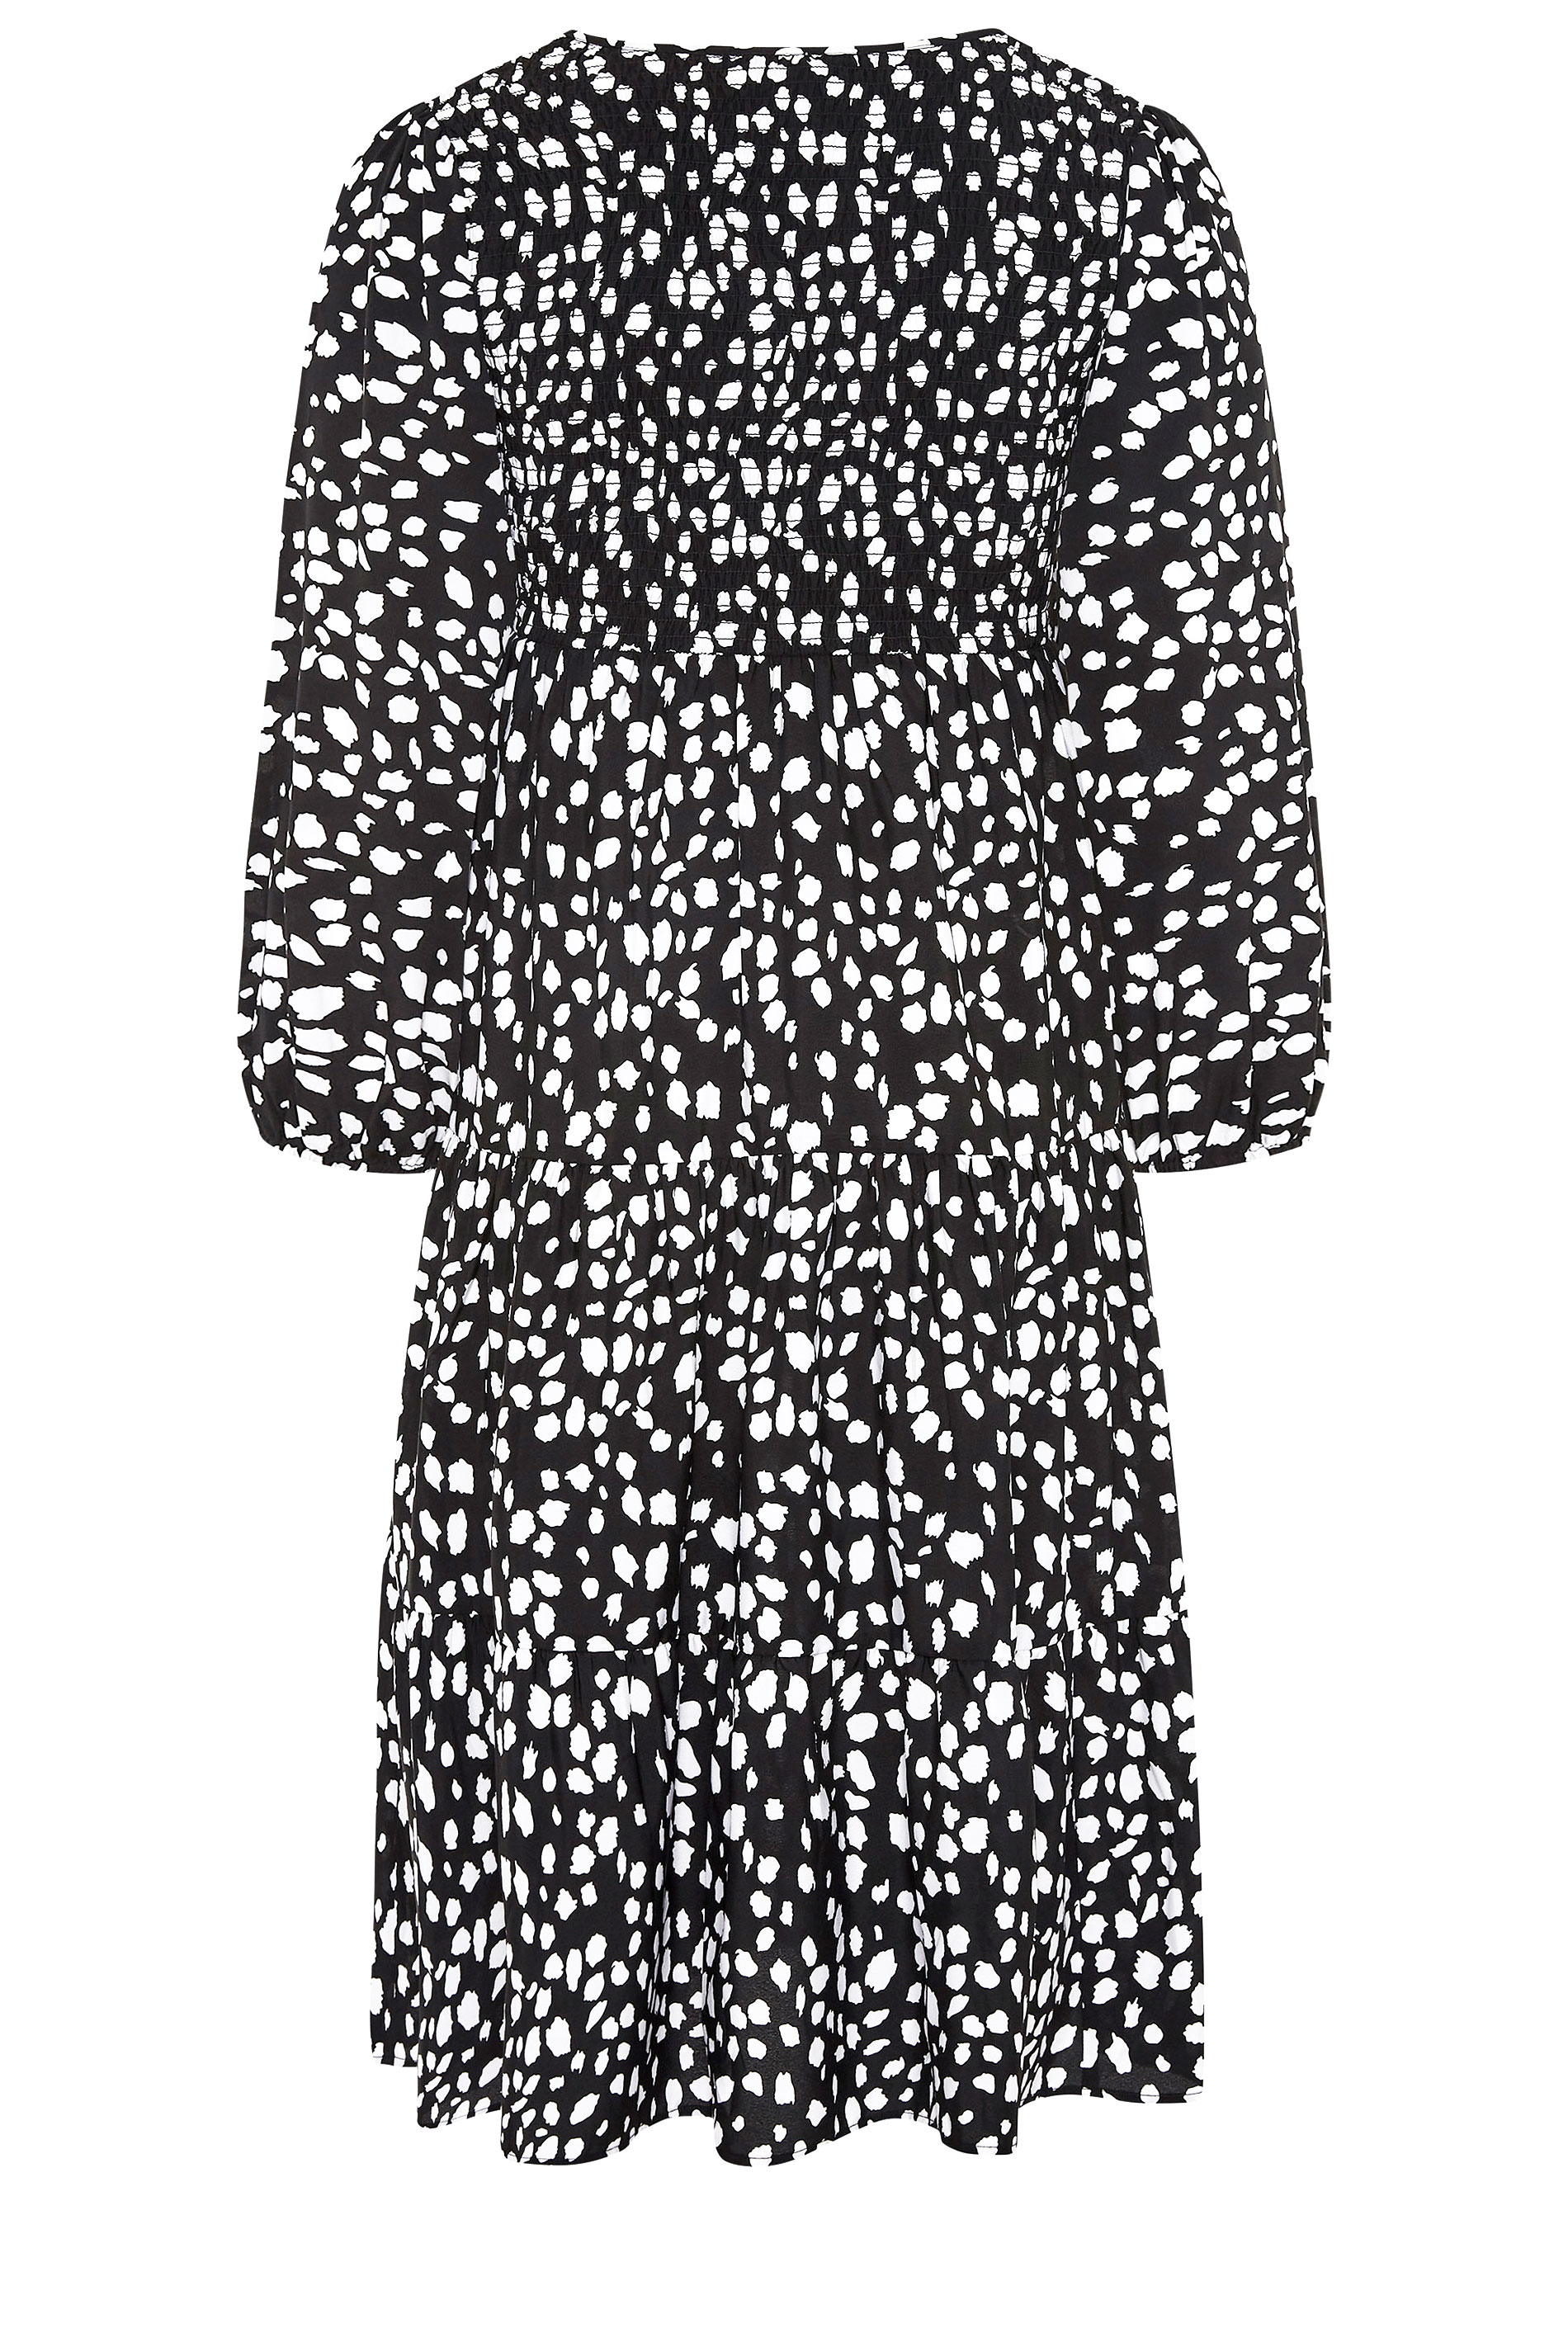 Plus Size Black Dalmatian Print Balloon Sleeve Midi Dress | Yours Clothing